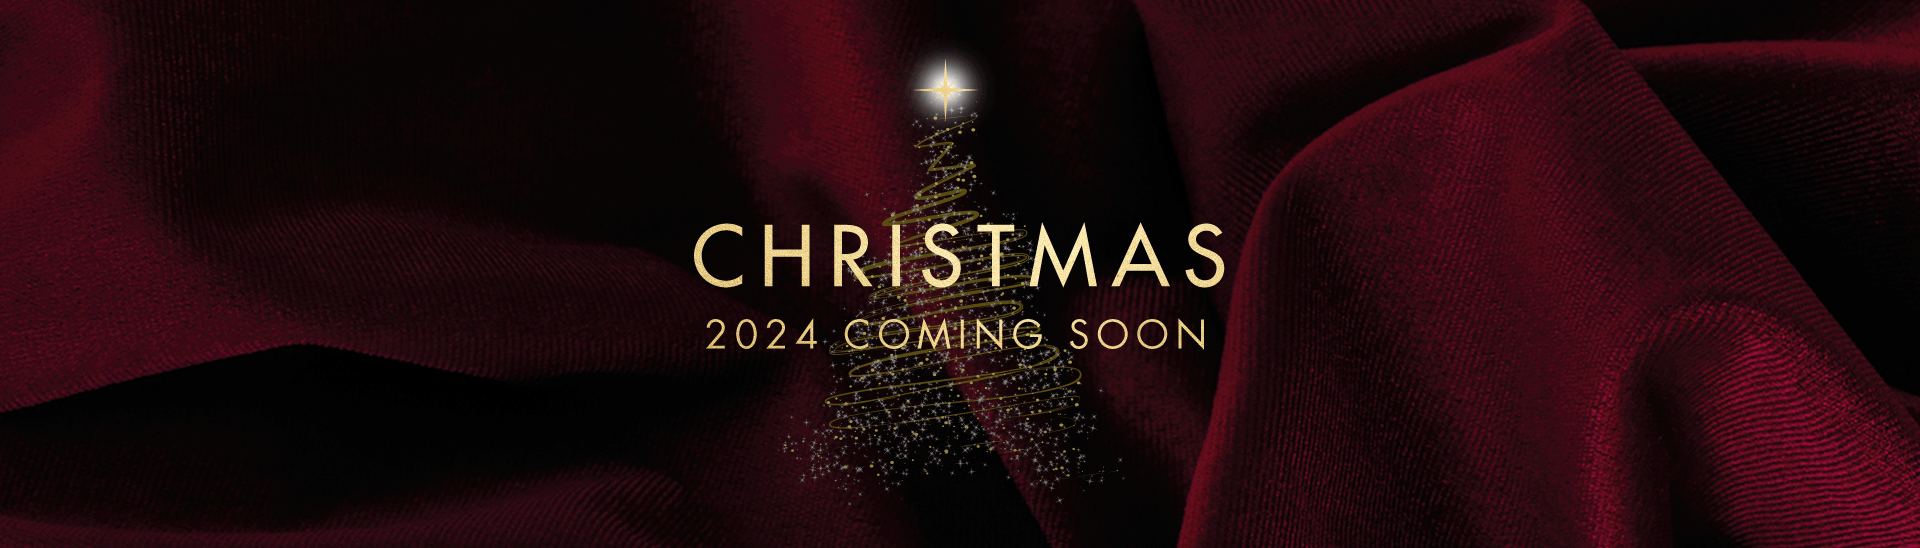 Christmas 2024 at Maidenhead